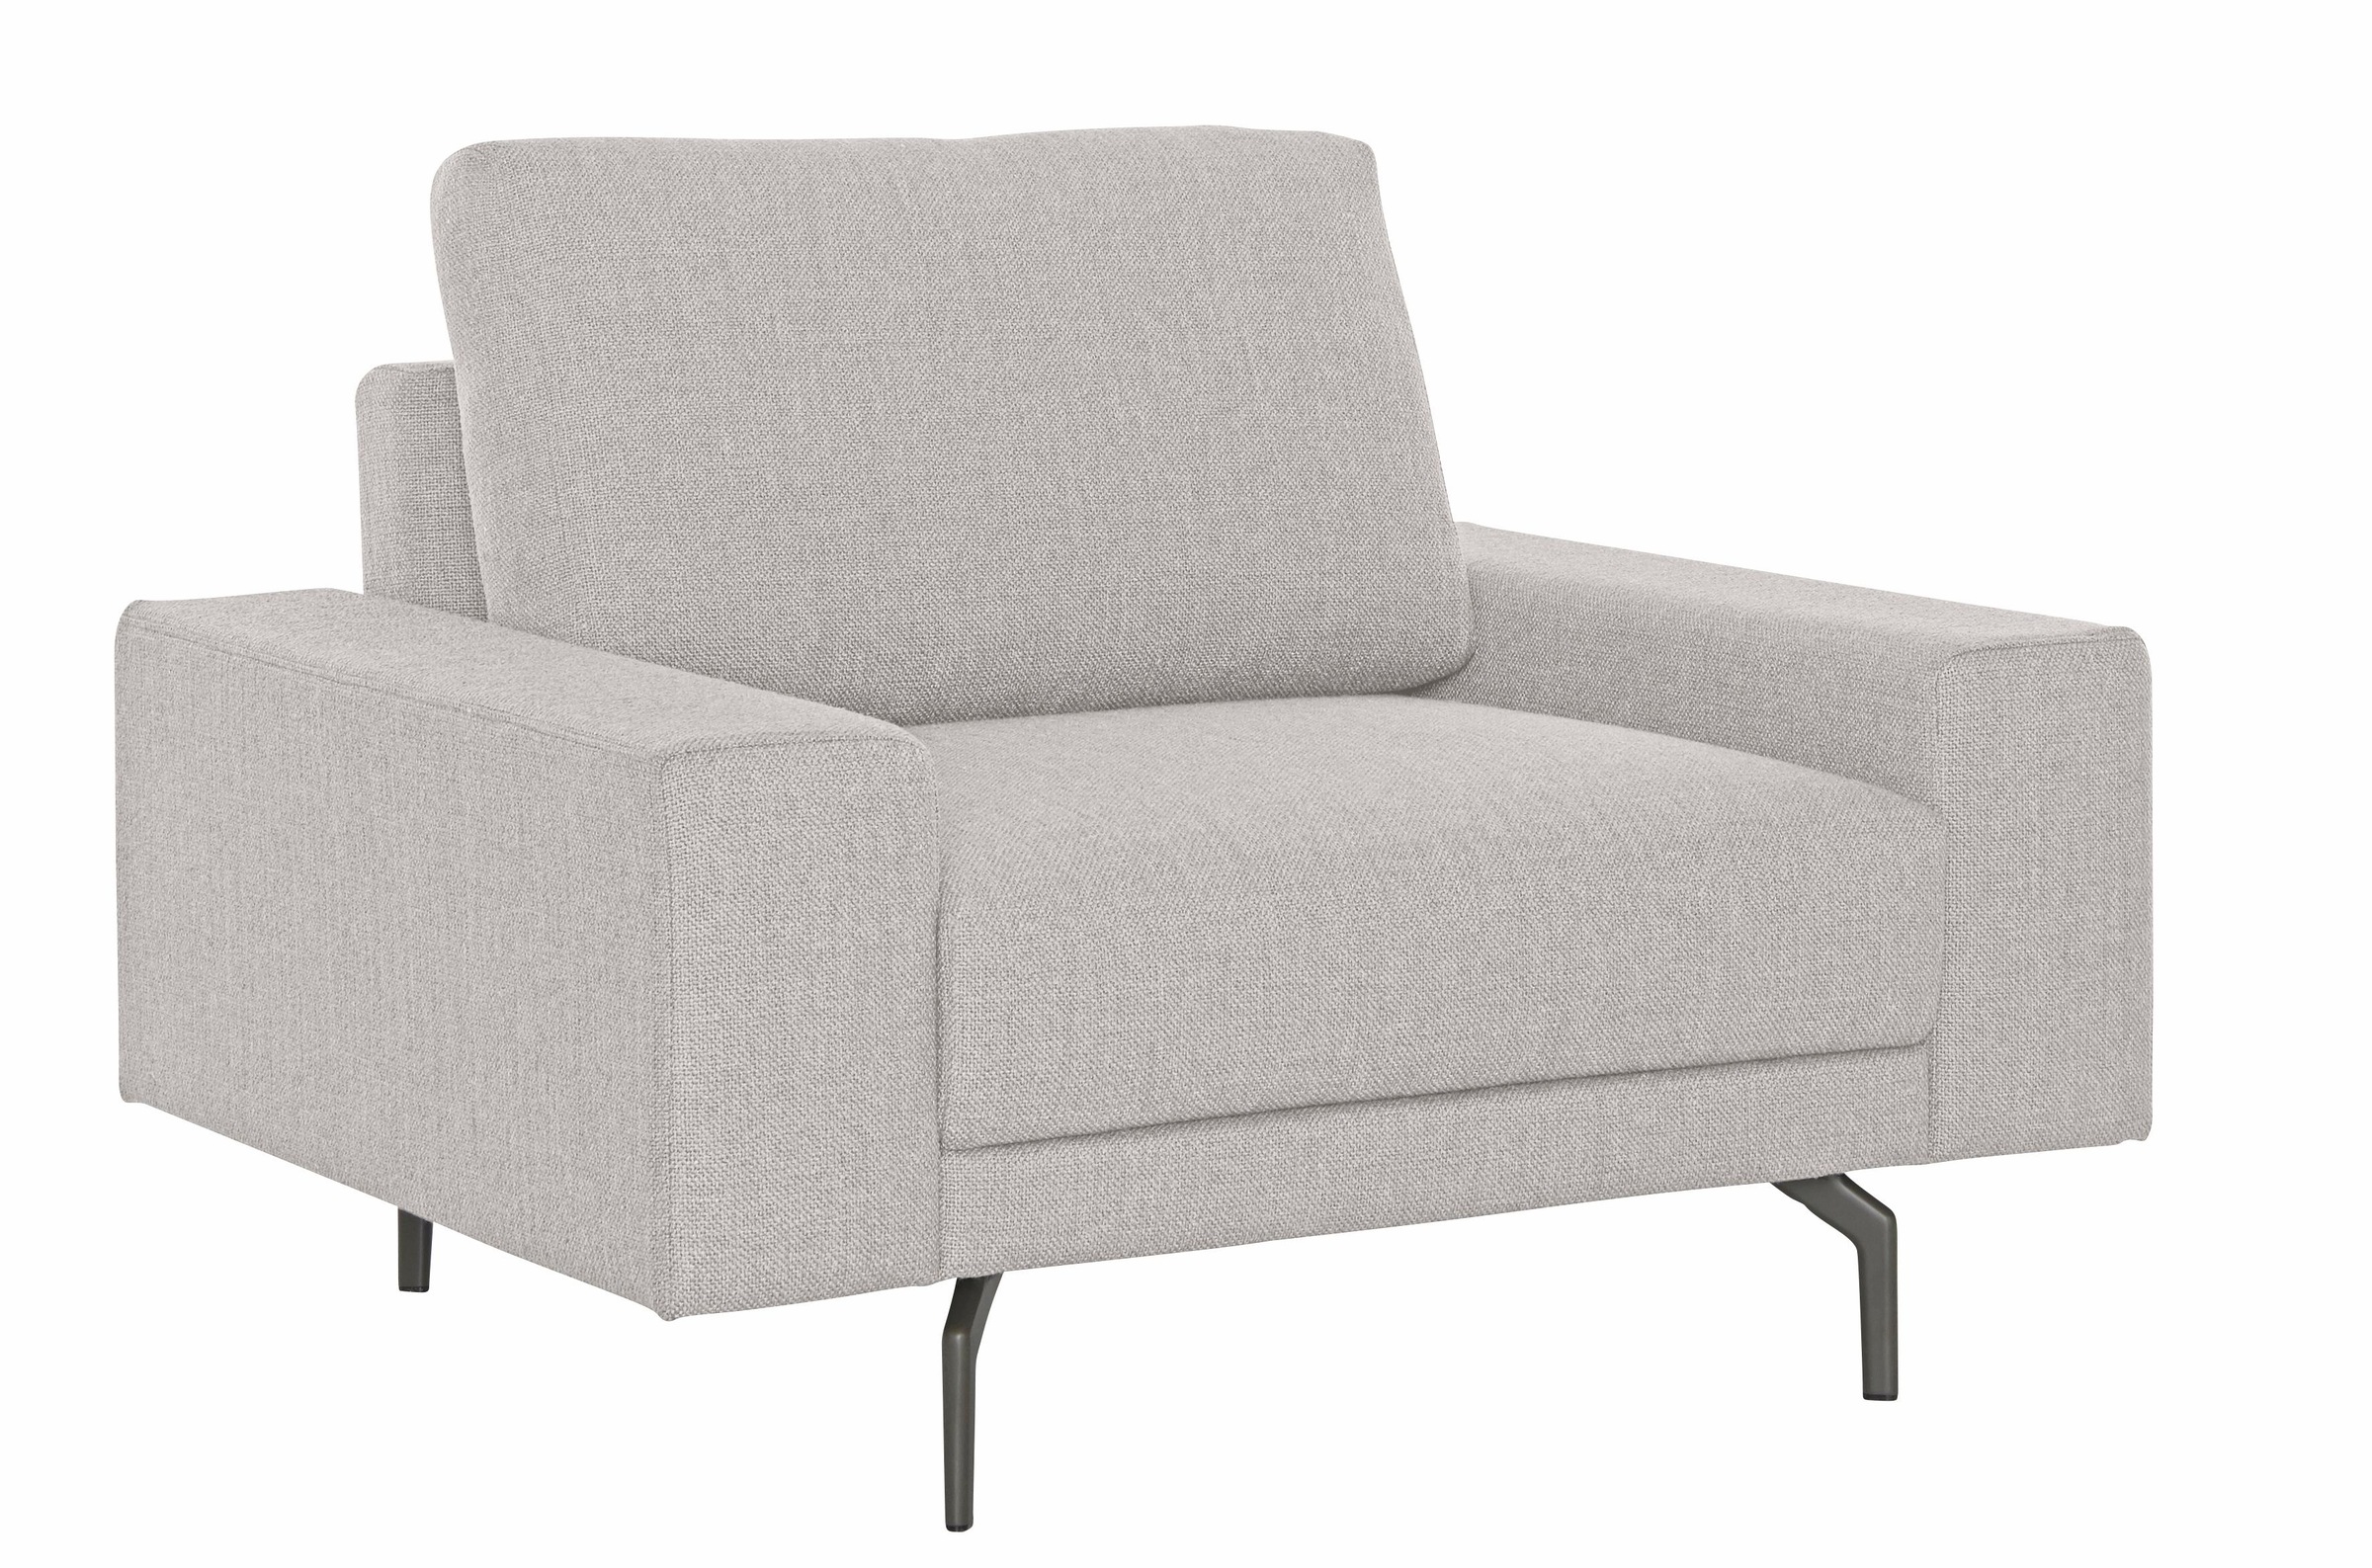 Breite breit Armlehne umbragrau, »hs.450«, hülsta bei sofa Alugussfüße 120 Sessel in cm OTTO niedrig,